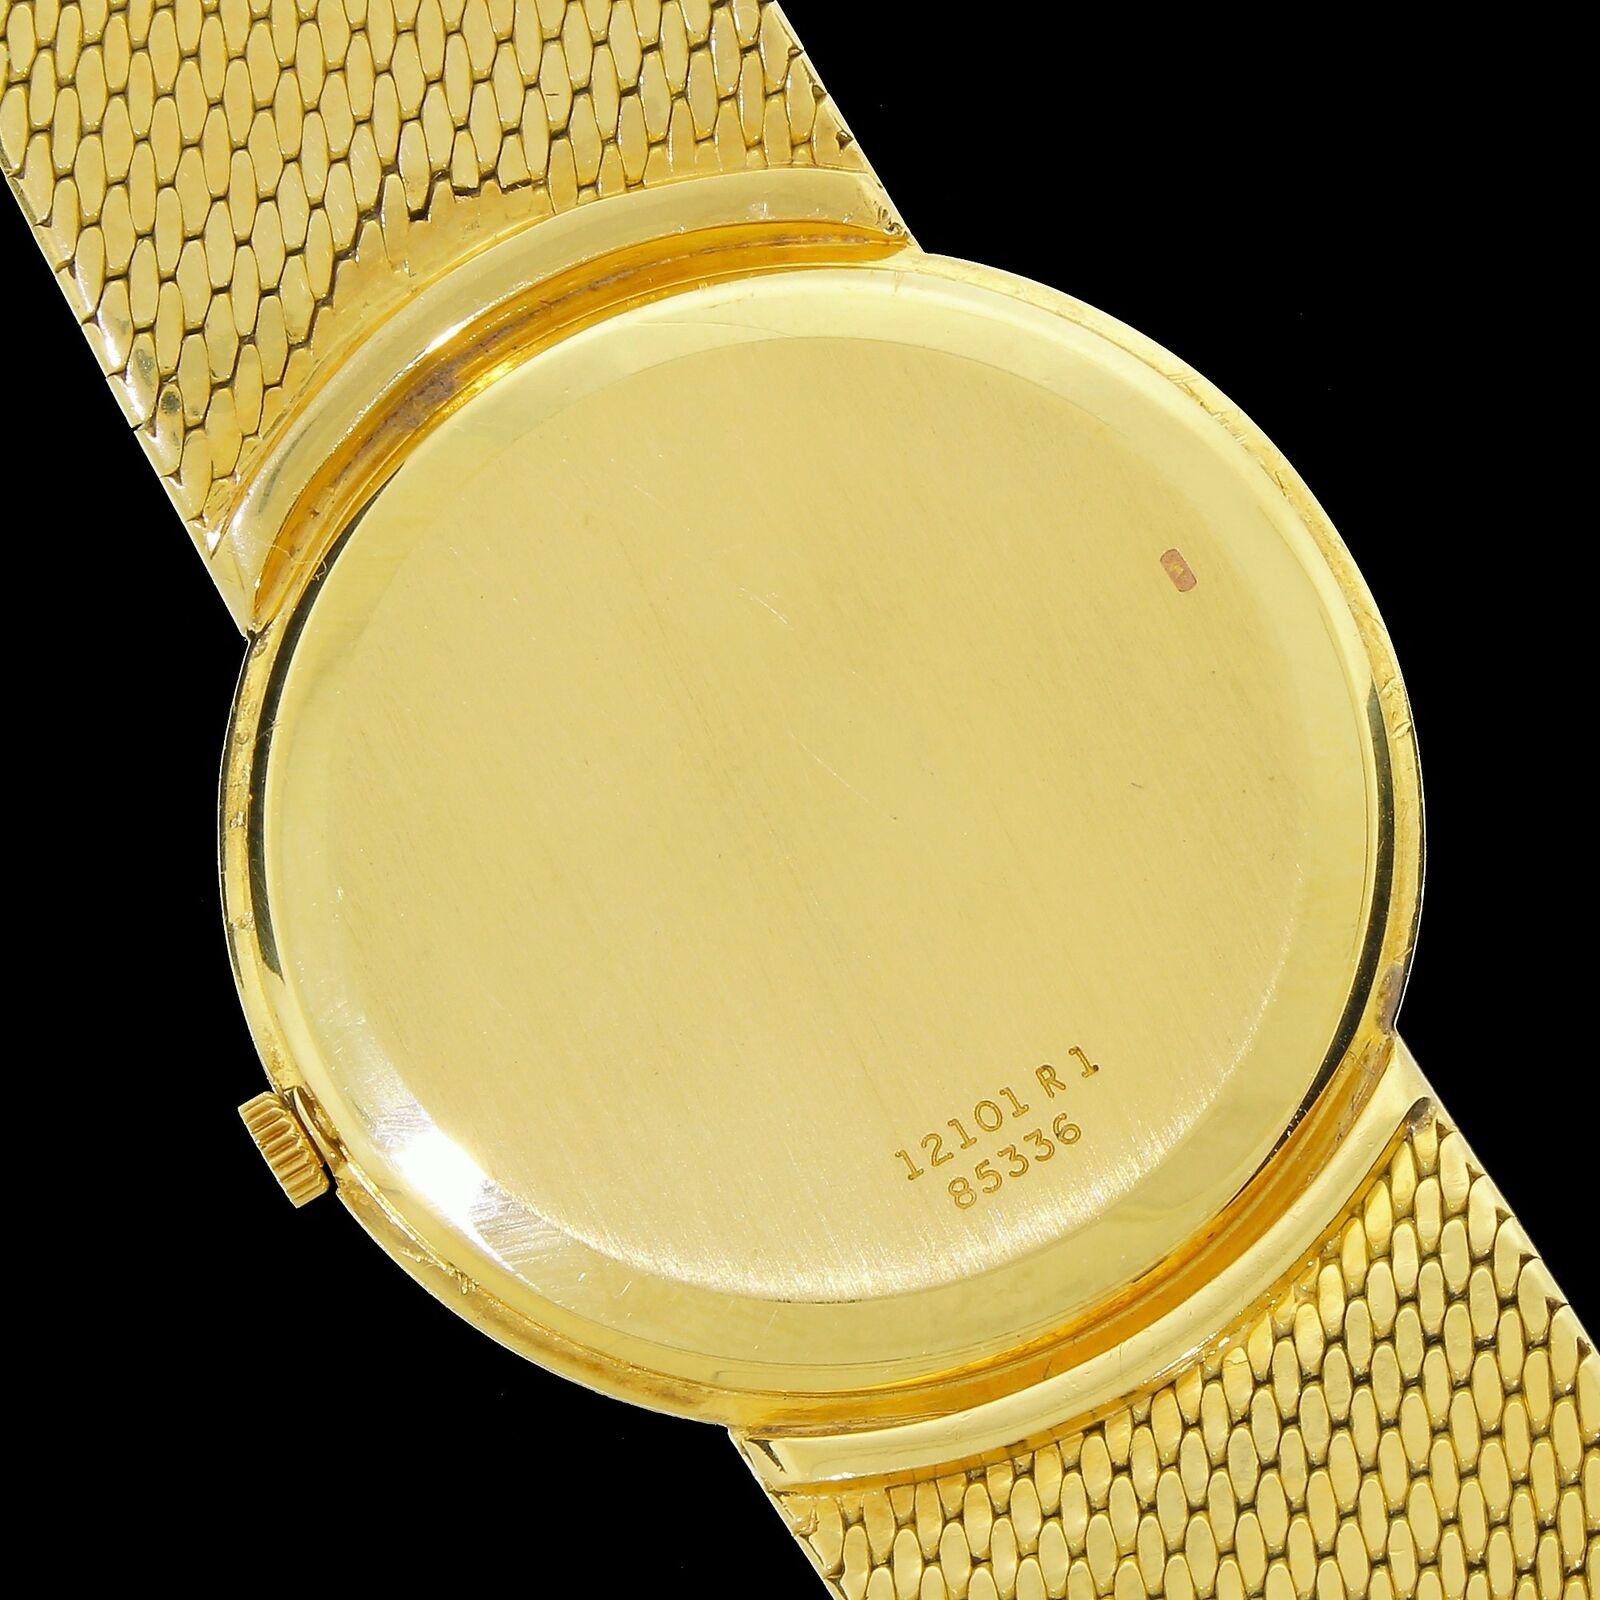 Modern Men's Piaget Dress Watch 18 Karat Yellow Gold 30J Thin Automatic Wristwatch